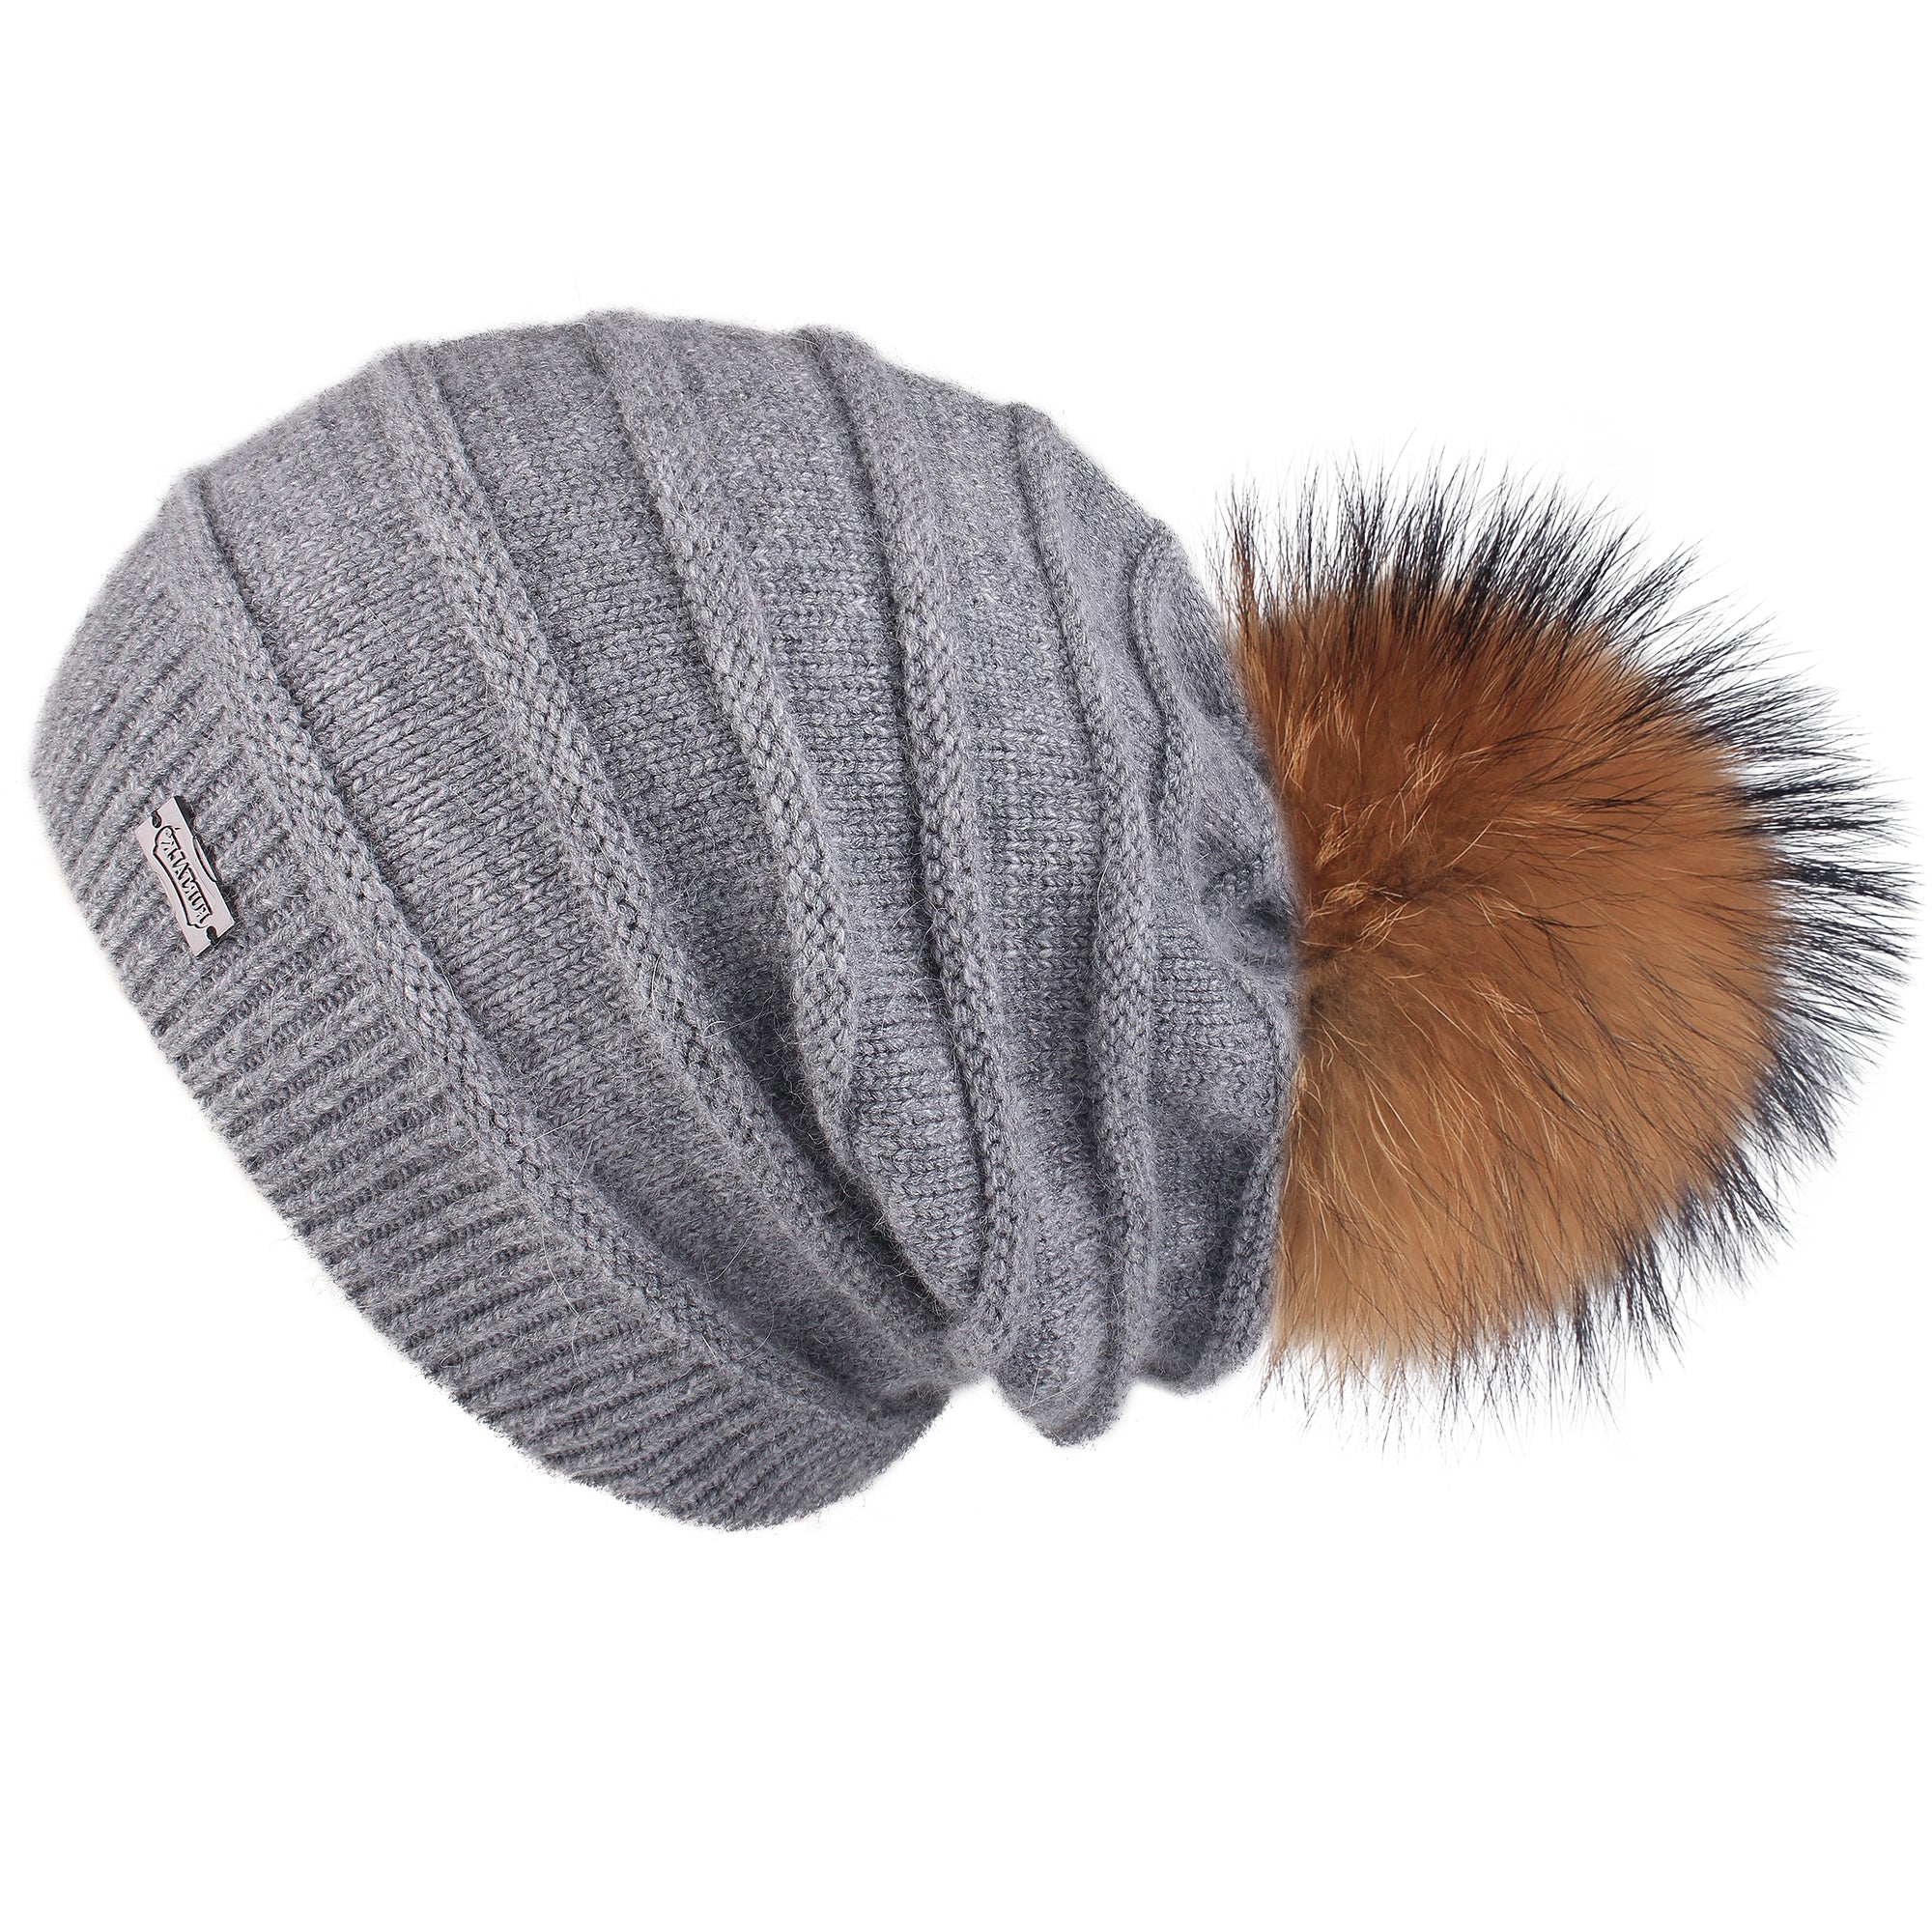 Genuine Fur Pom Pom for Hats — The Doily Lady